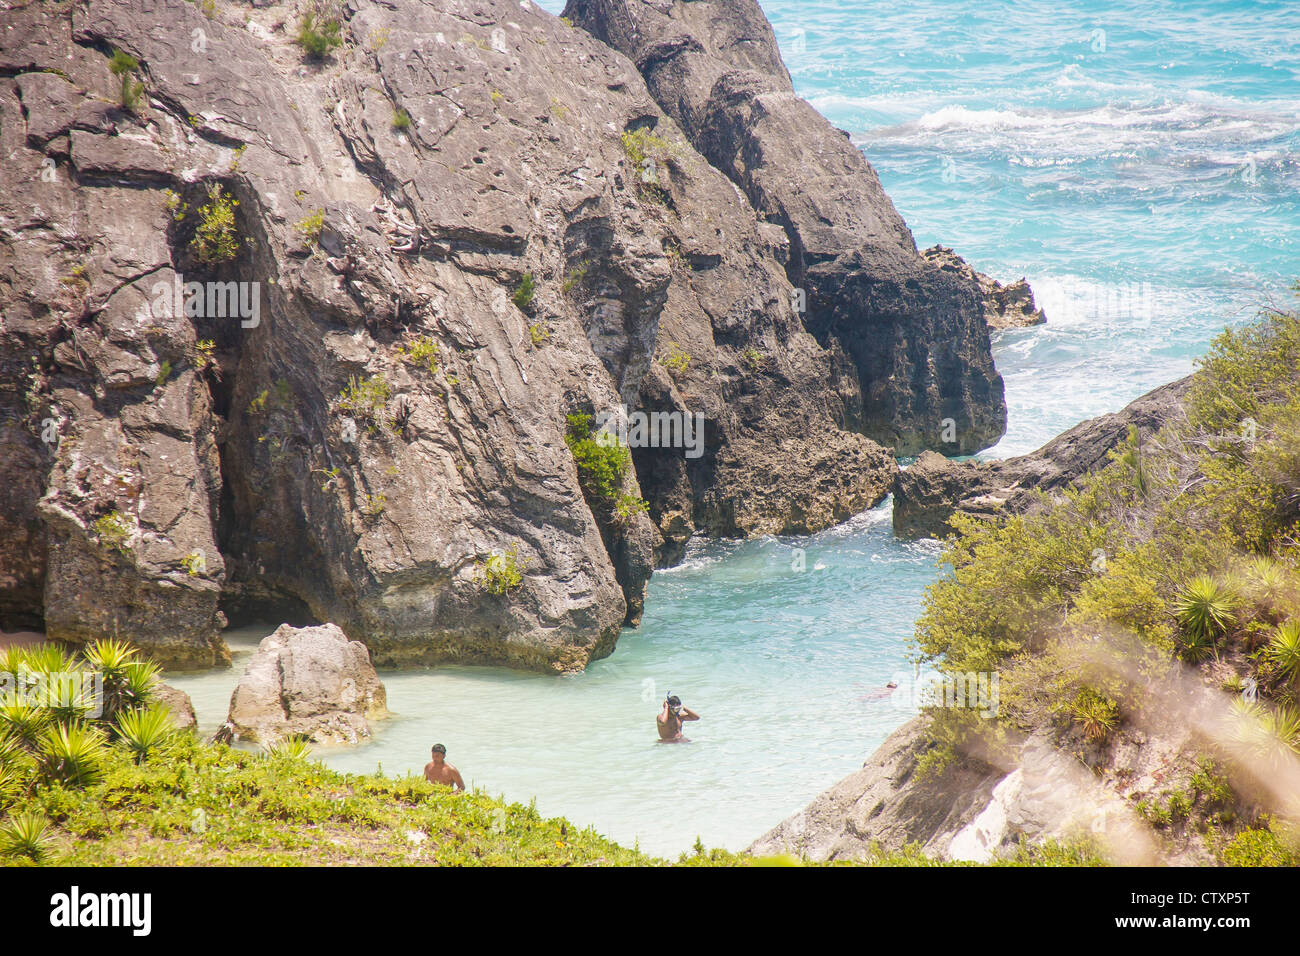 Two men snorkeling off the rocky coast of Bermuda Stock Photo